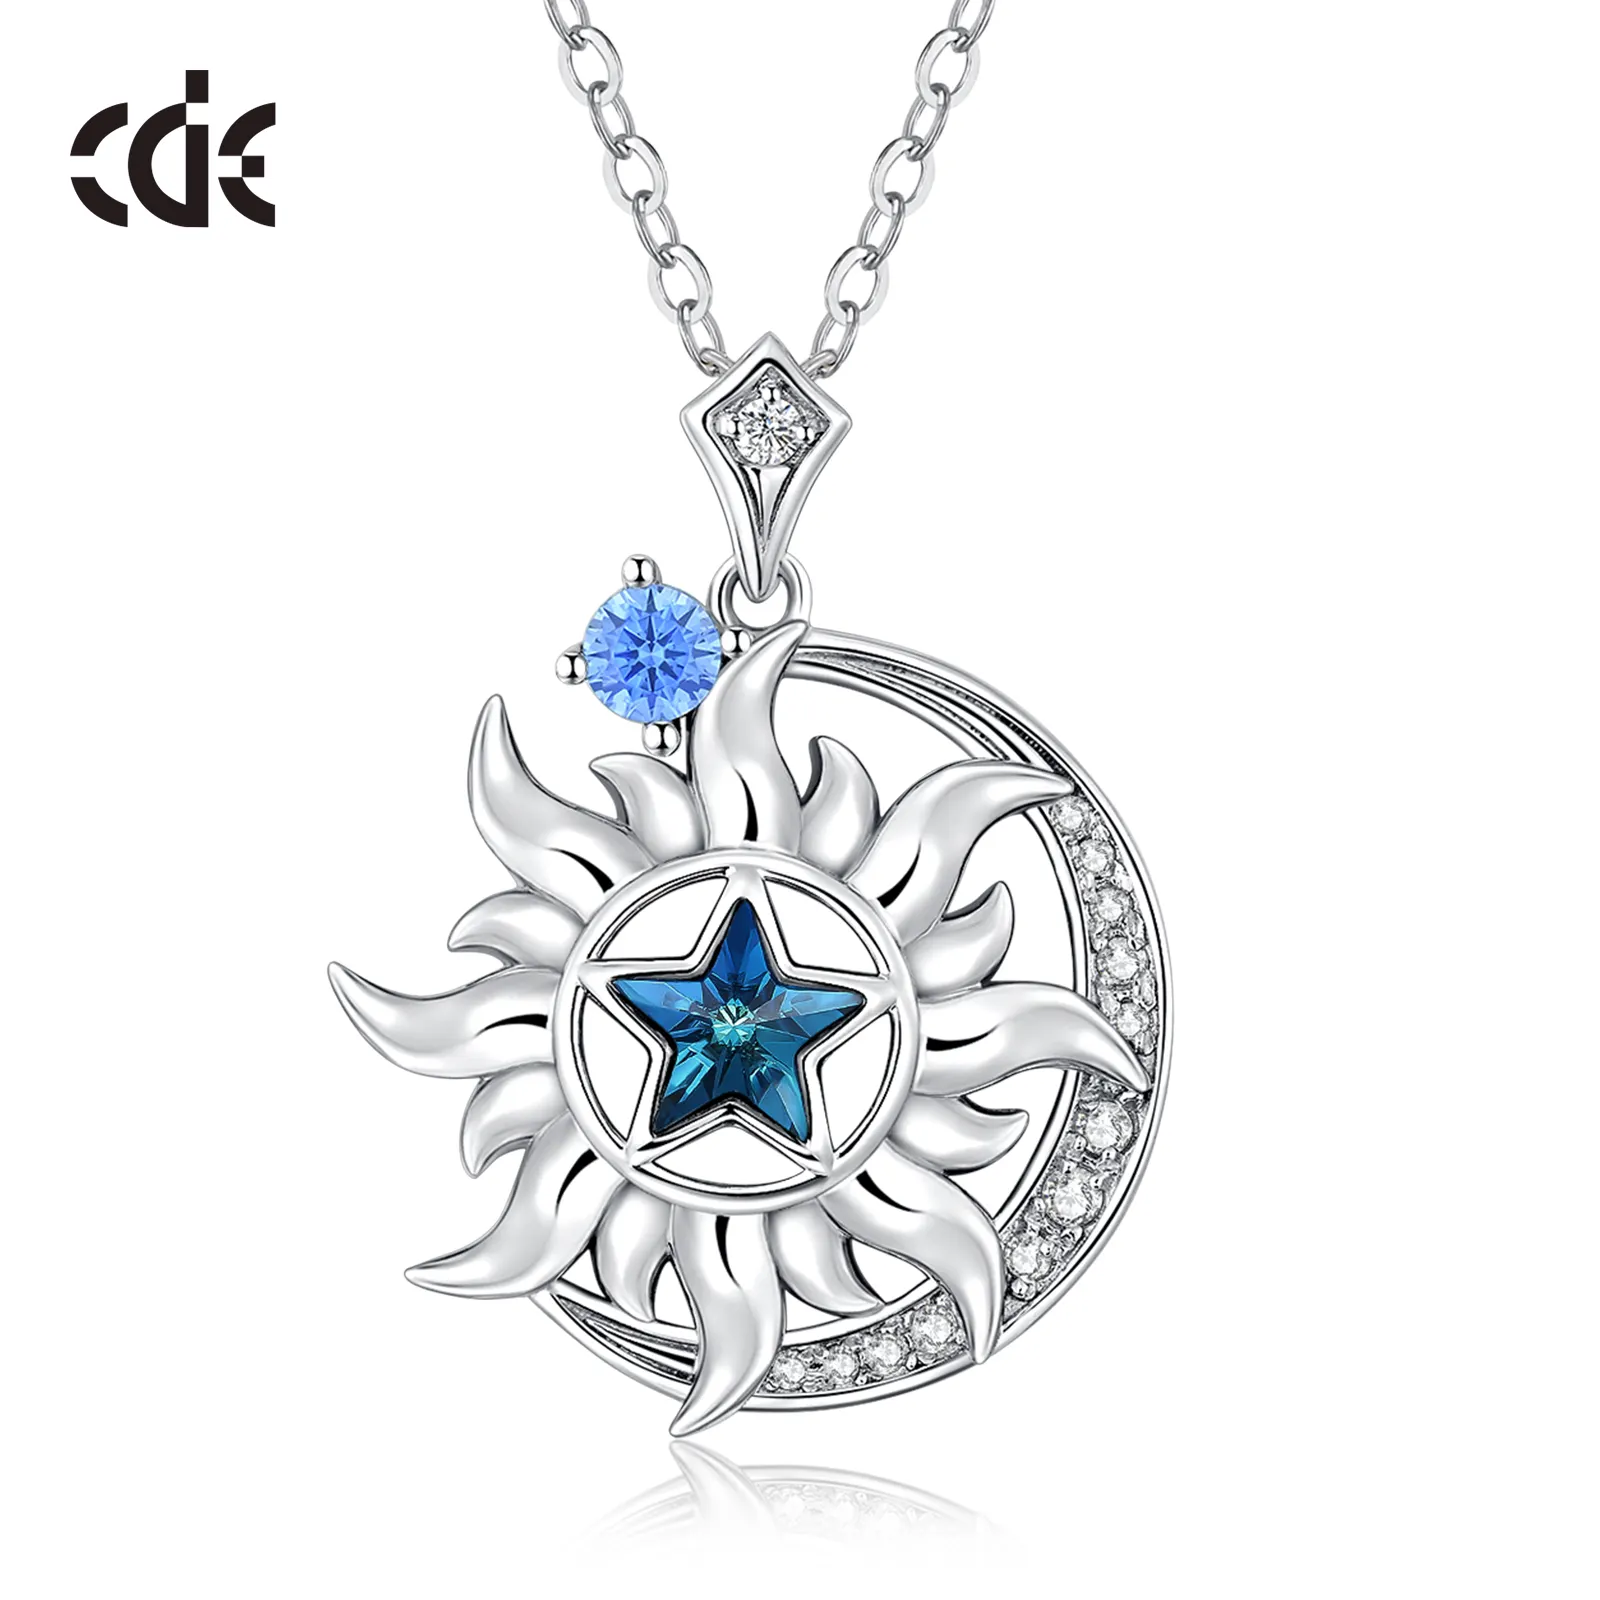 CDE SSYN010 perhiasan kreativitas 925 perak murni kalung totem bulan bintang grosir kalung kristal biru berlapis Rhodium